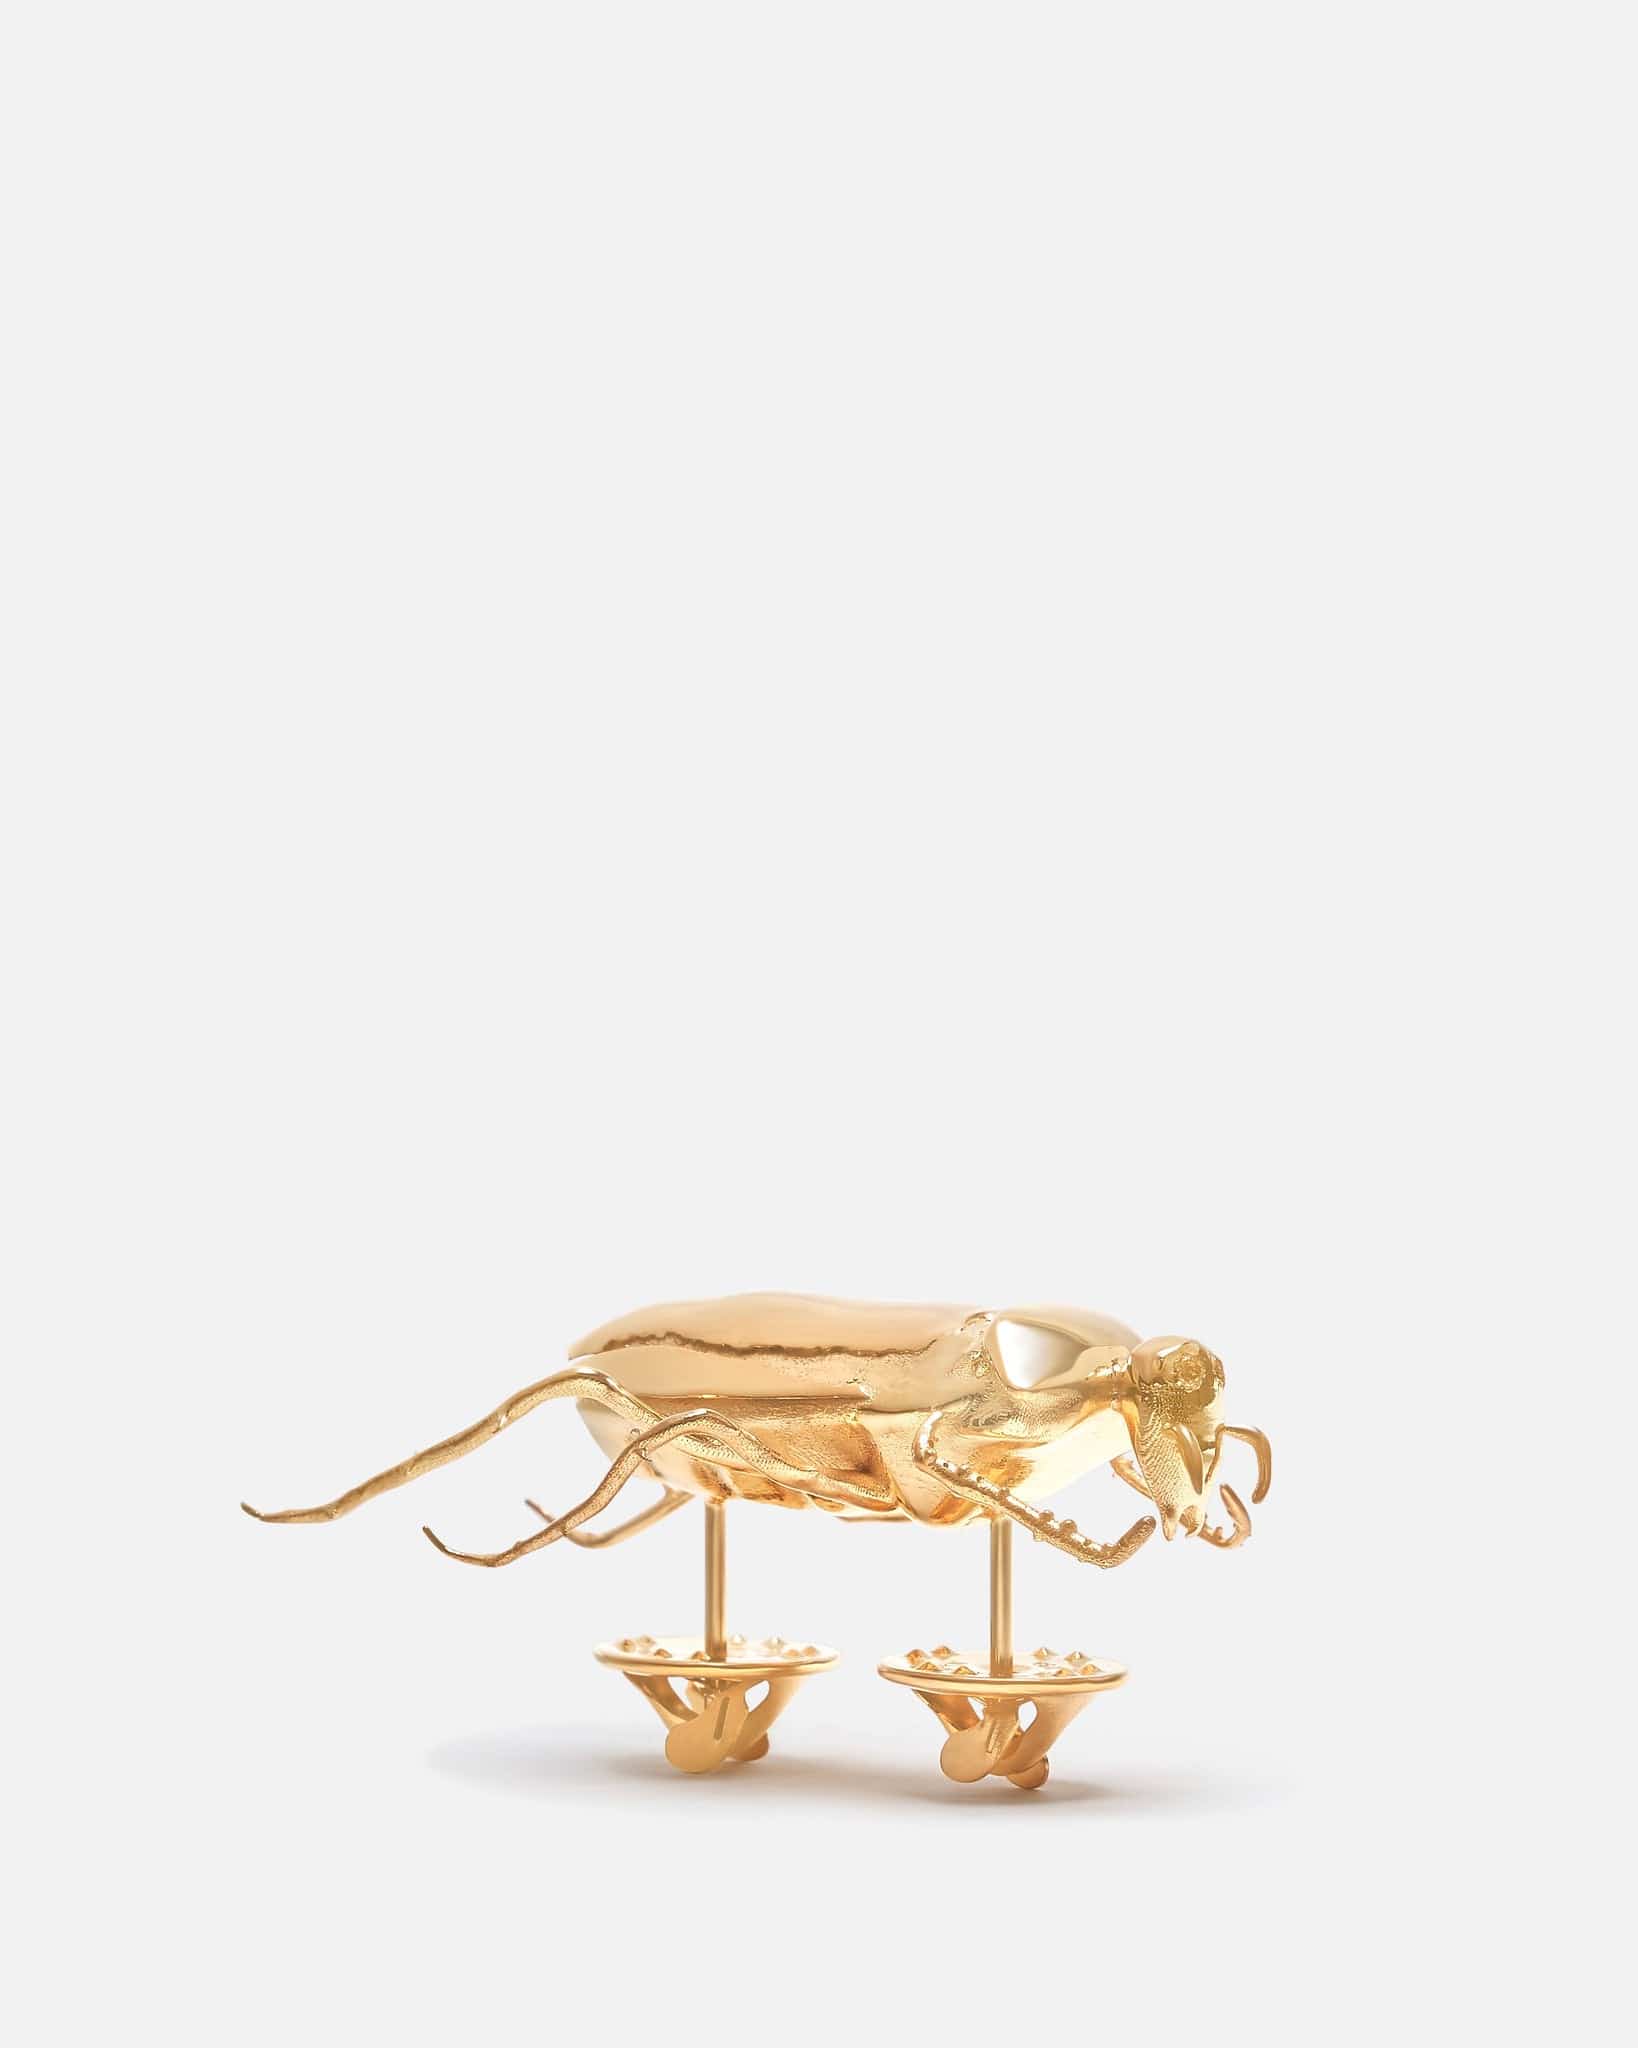 Secret of Manna Jewelry O/S La Cucaracha Broach in Gold